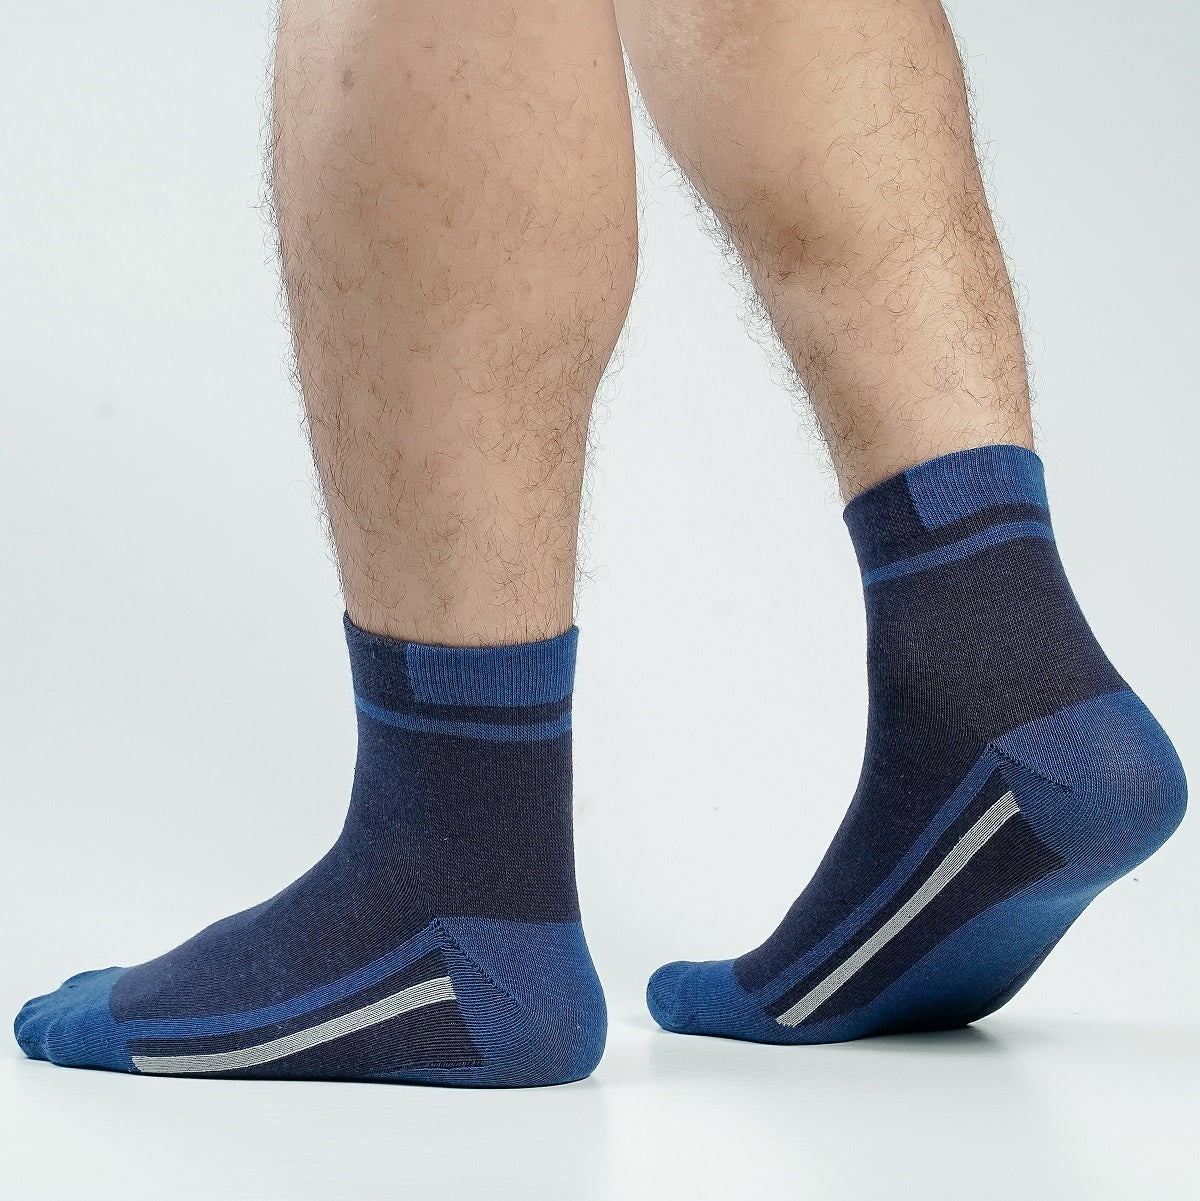 X-club Ankle Socks For Men